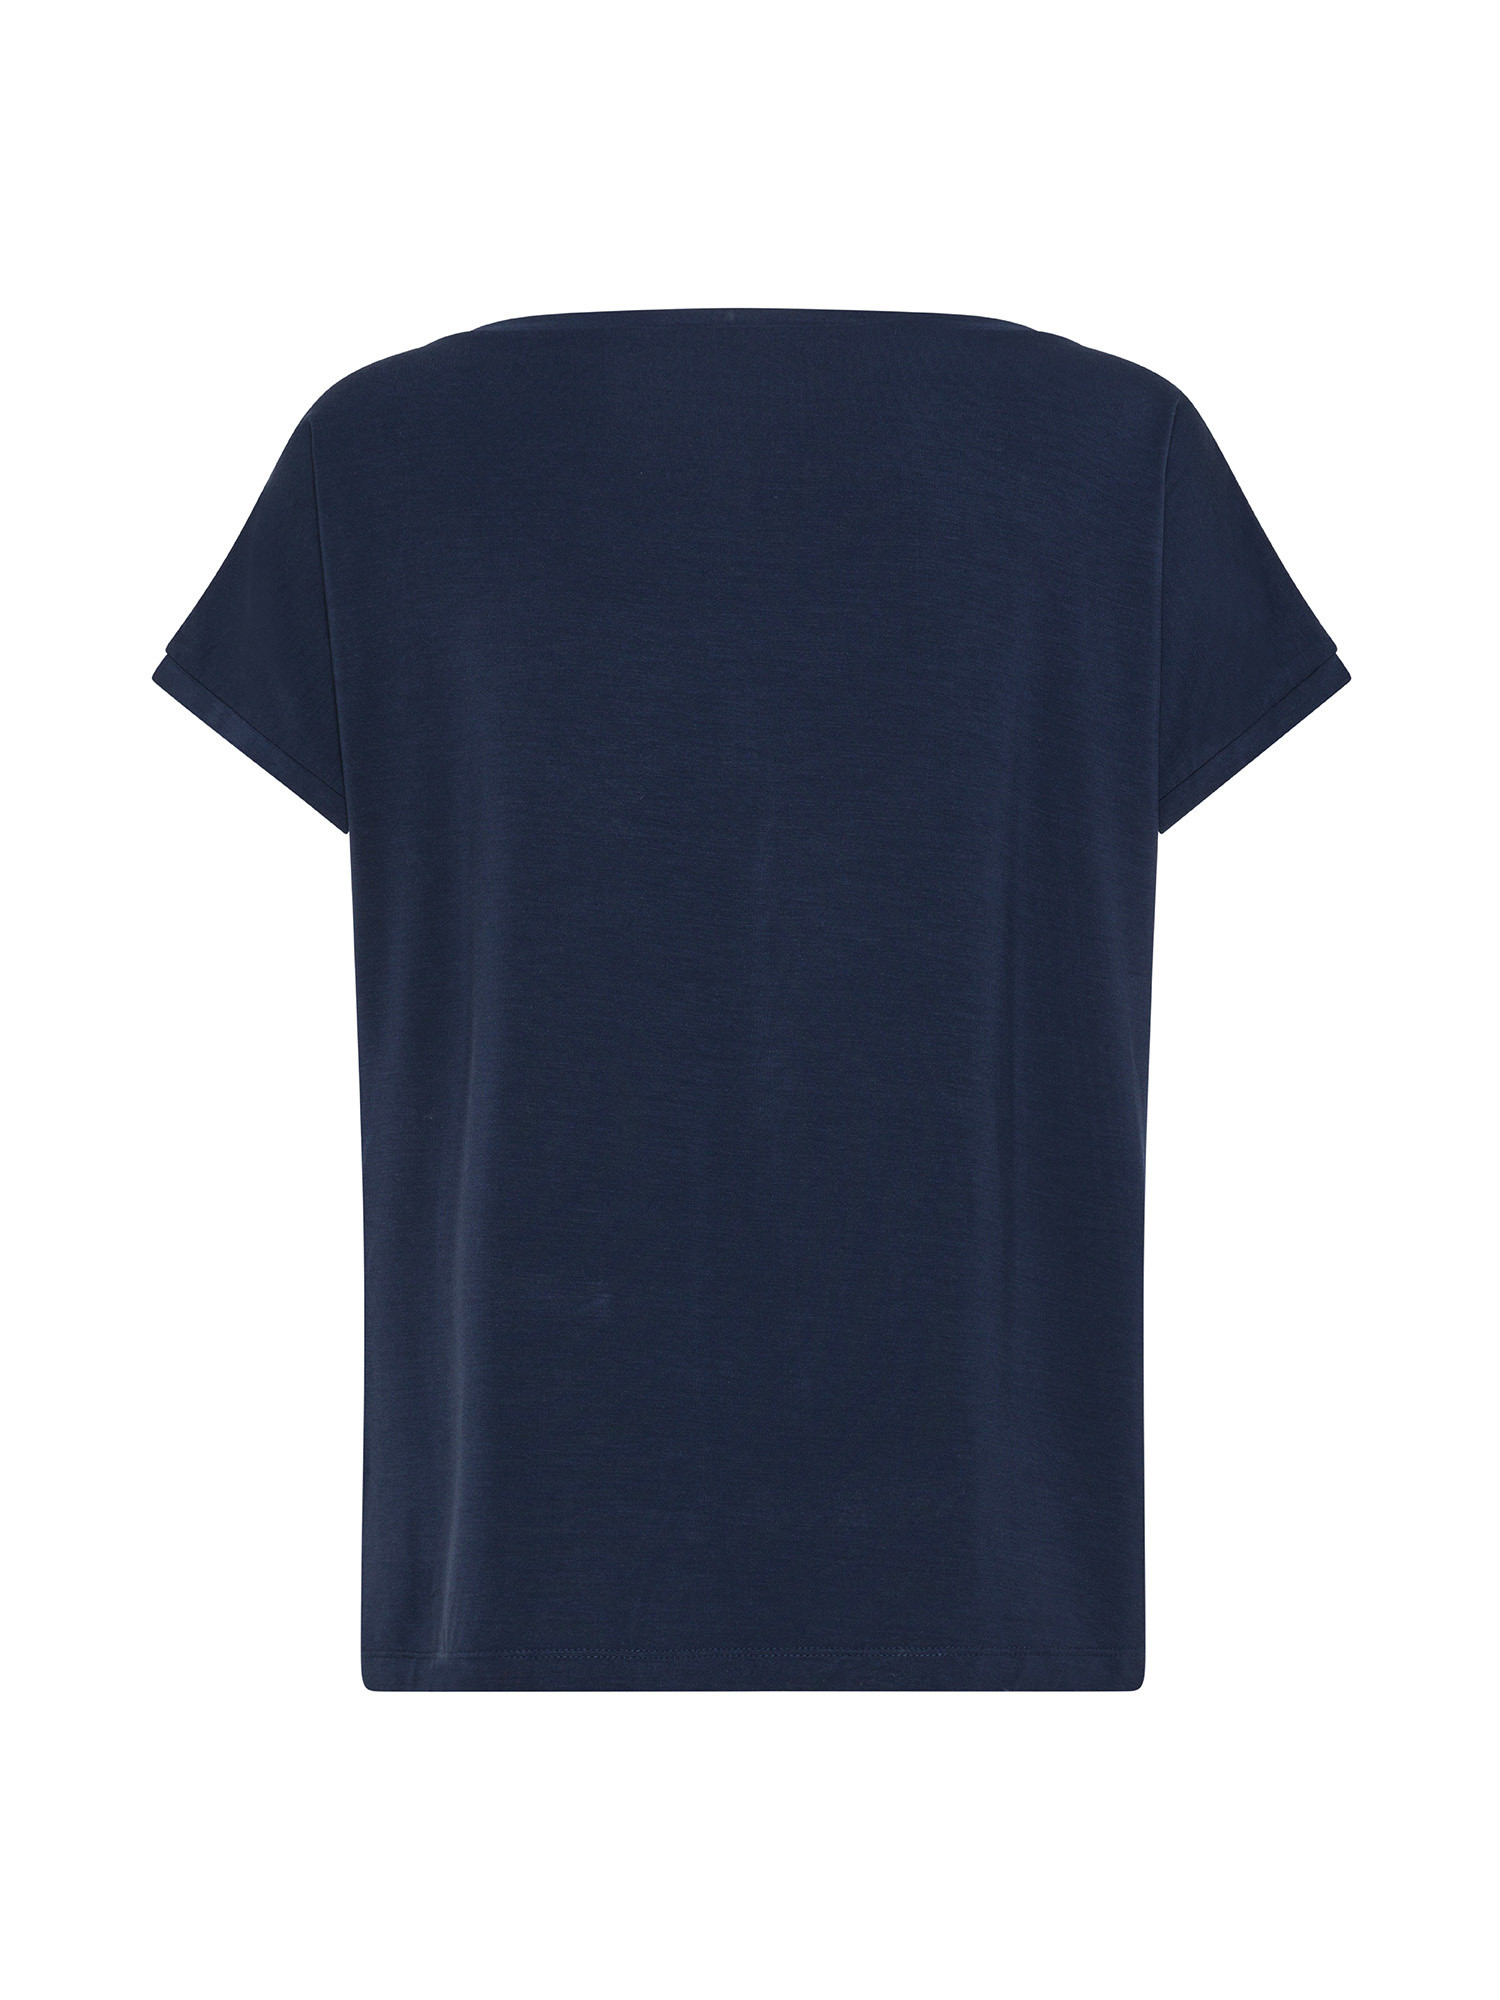 T-shirt in viscosa di bamboo, fresca e leggera., Blue Navy, large image number 1